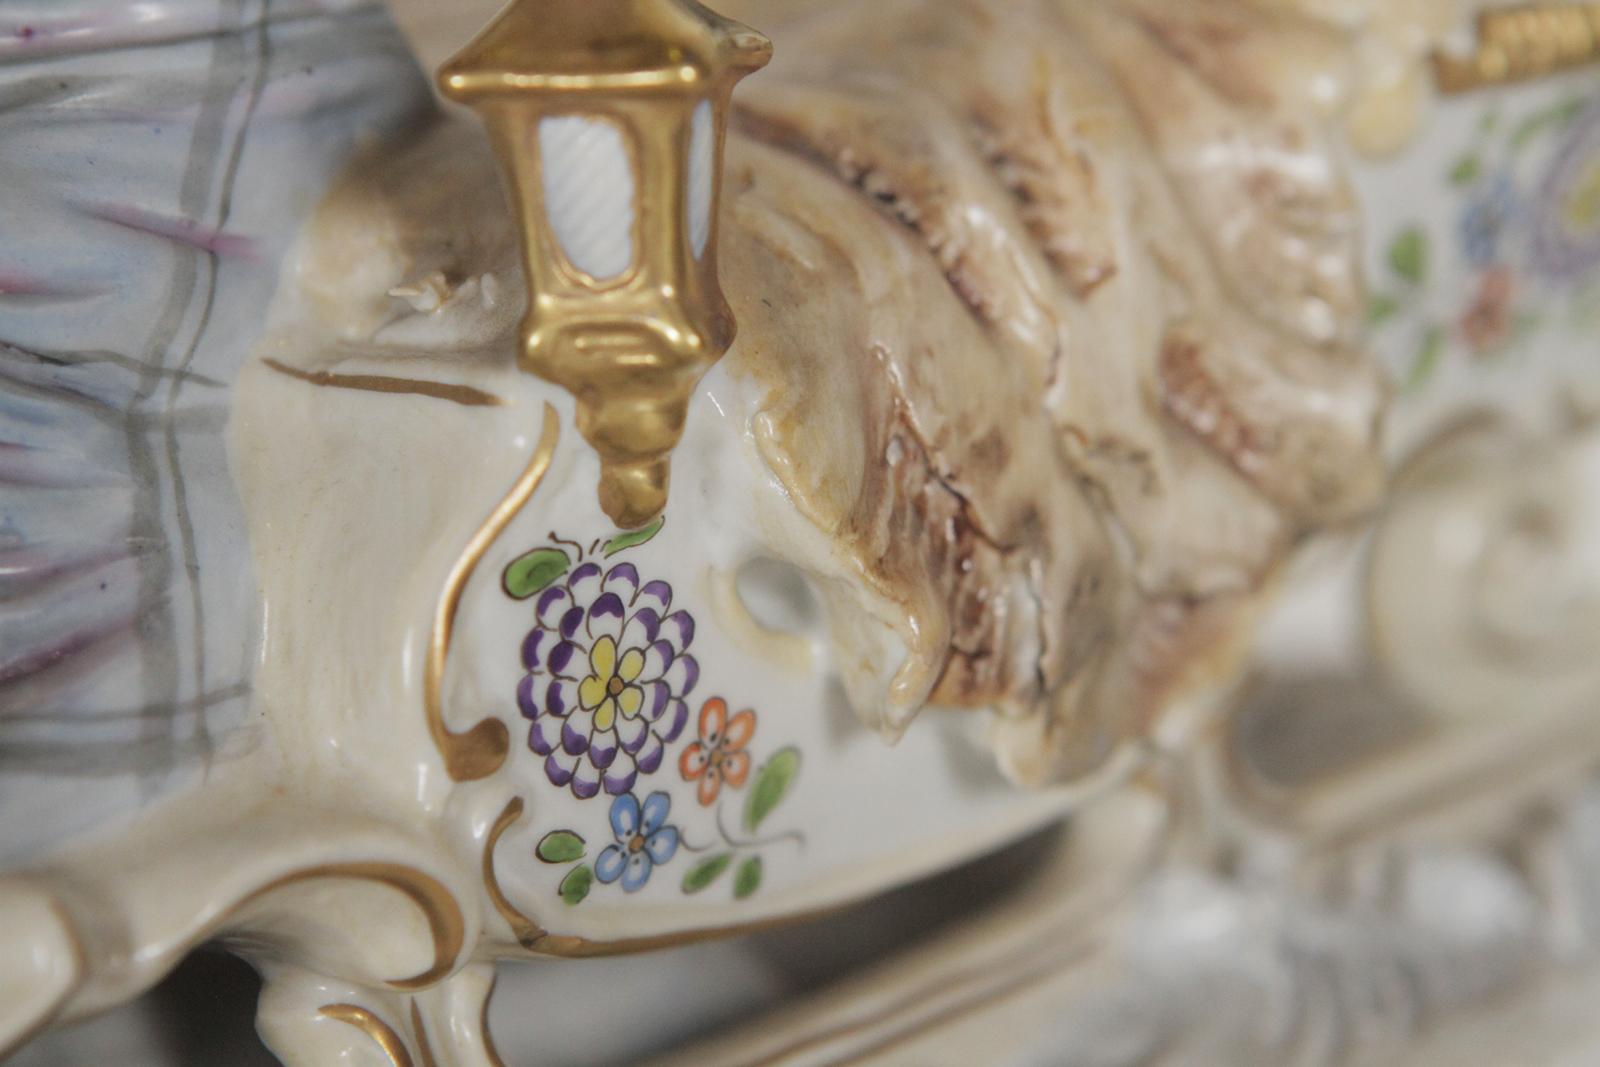 Scheibe-Ansbach Porcelain Figure. “St. Petersburg, Russia Sleigh Ride” 1